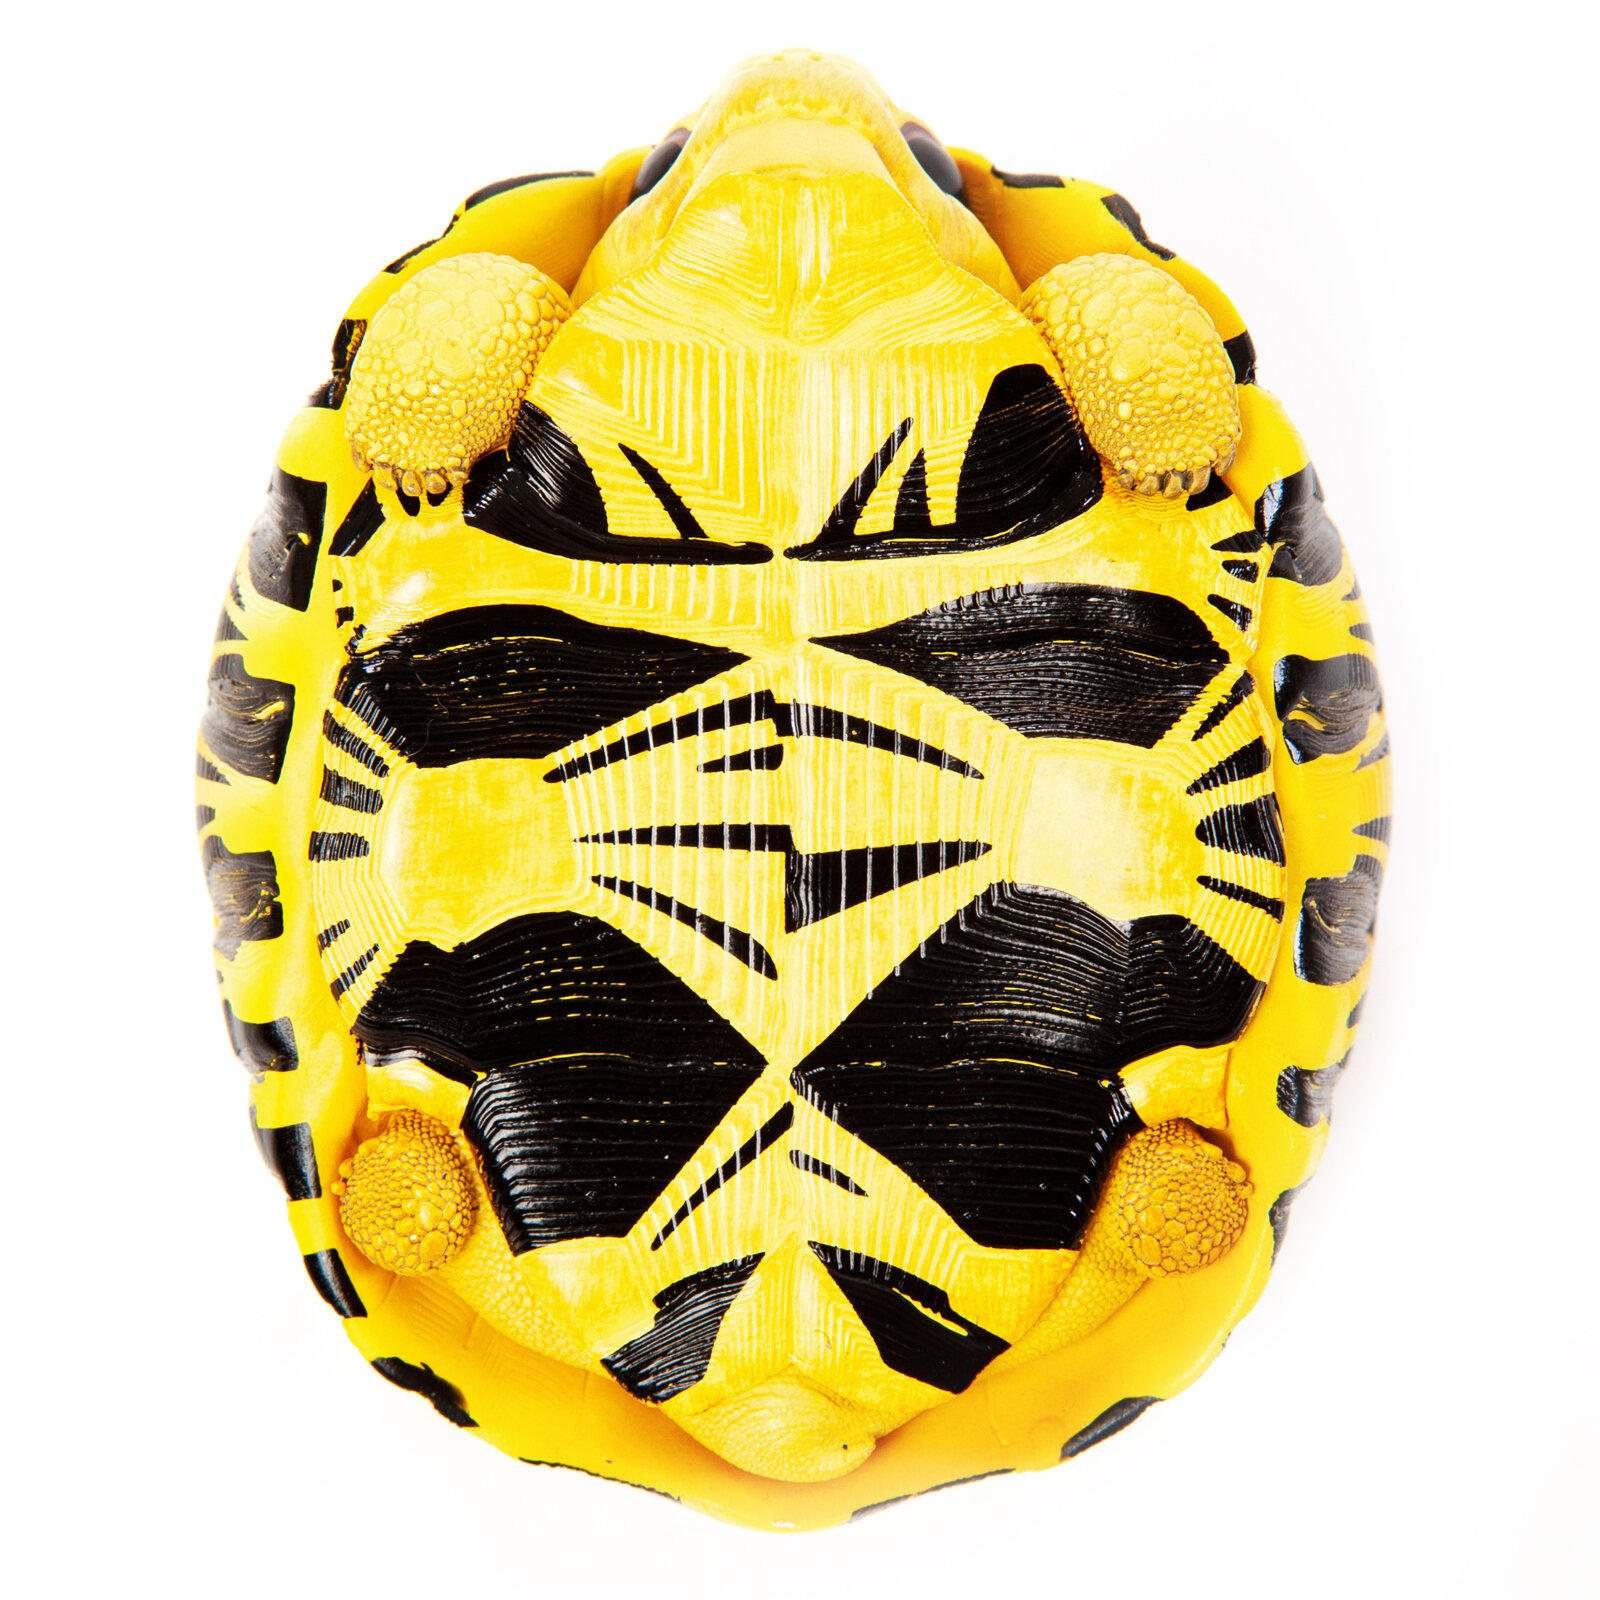 EXOPRIMA Фигурка лучевой черепахи, чёрно-жёлтая EXOPRIMA фигурки - фото №5